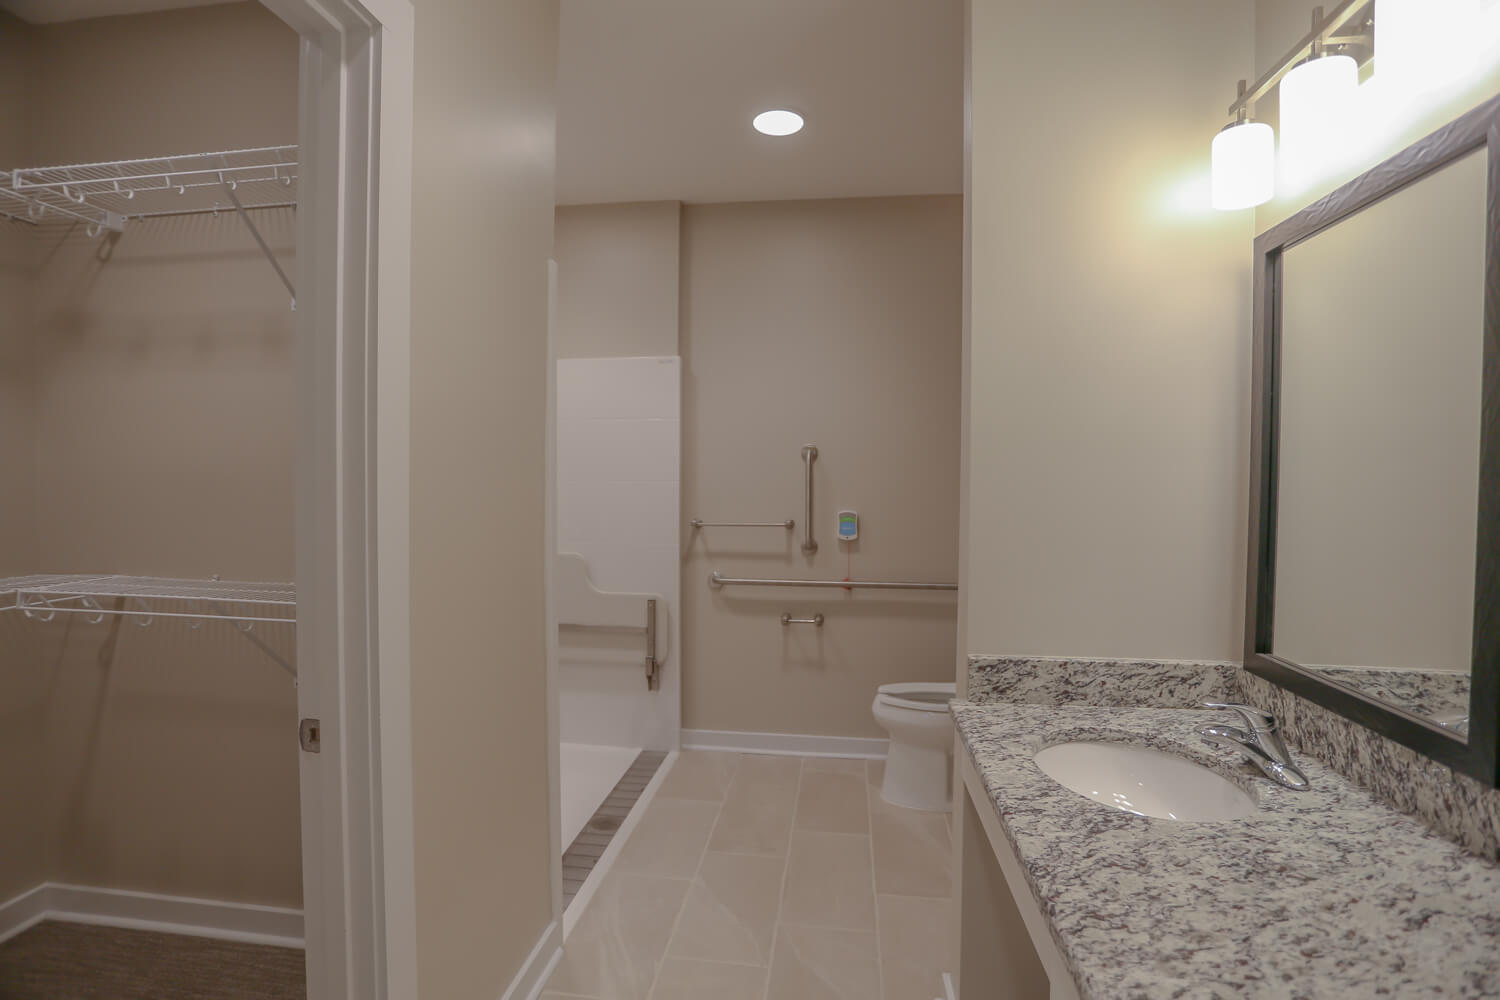 Grand South Senior Living - Bathroom - Designed by Foshee Architecture